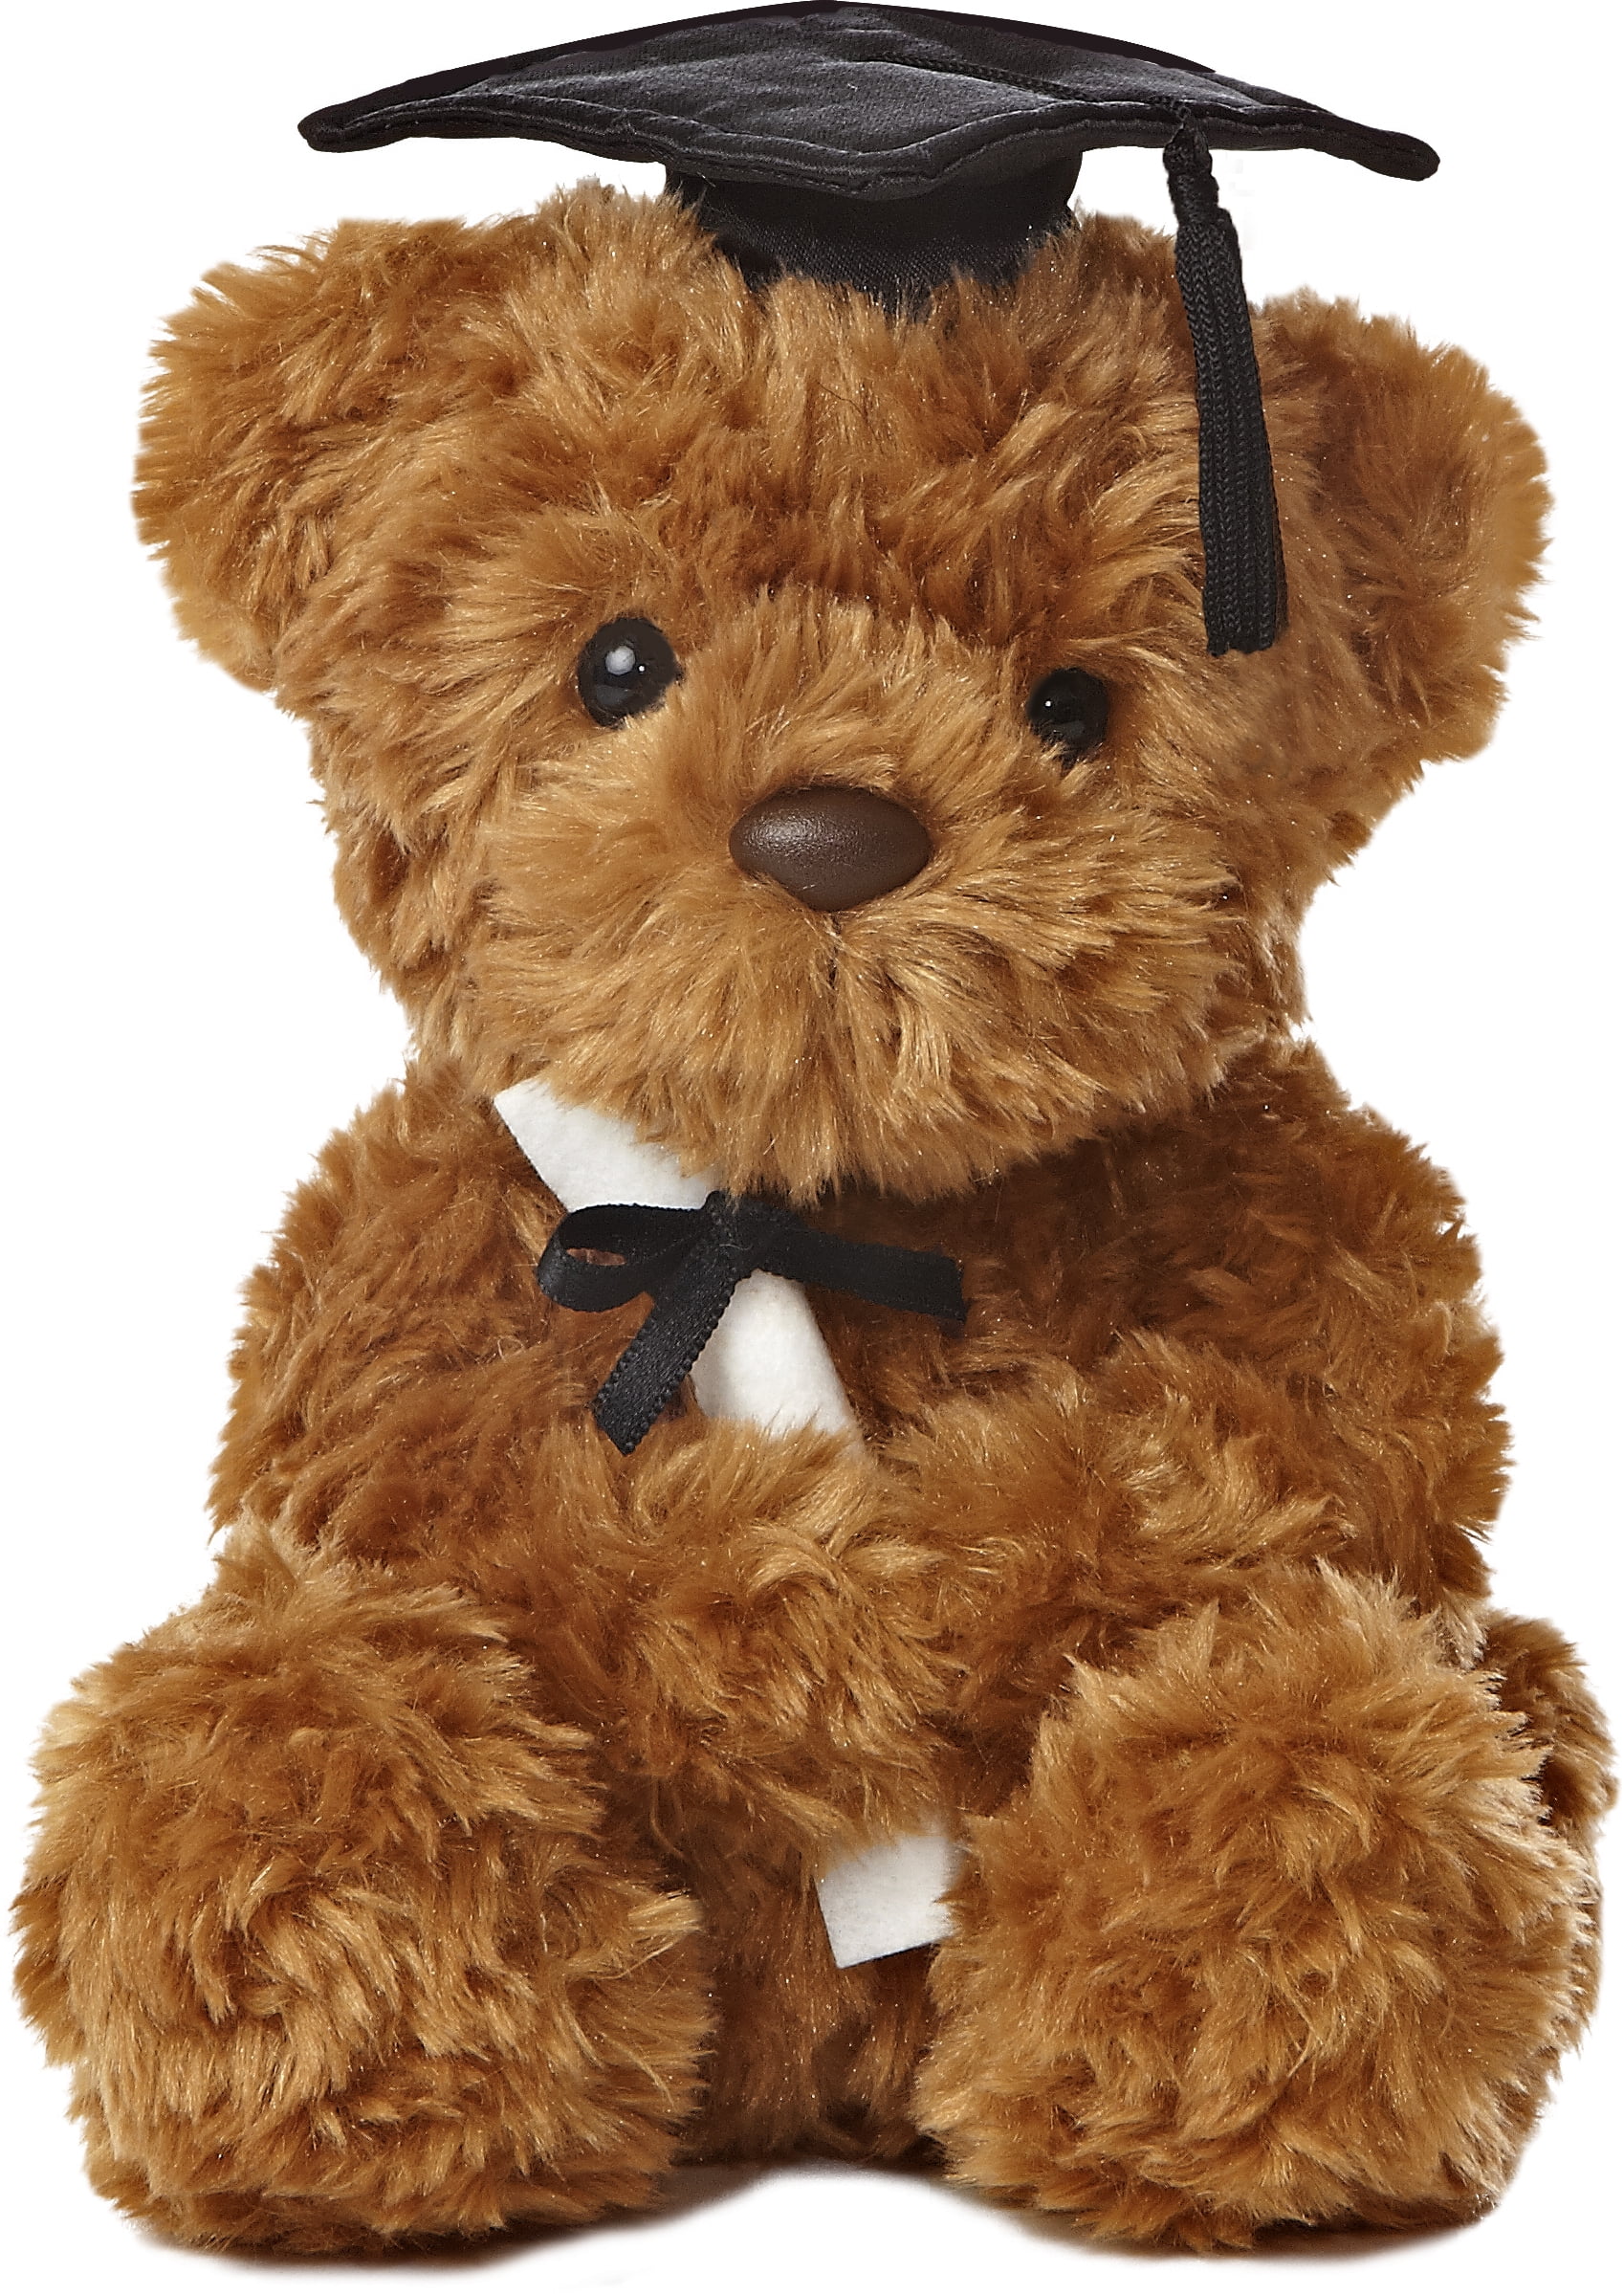 graduation teddy bear walmart